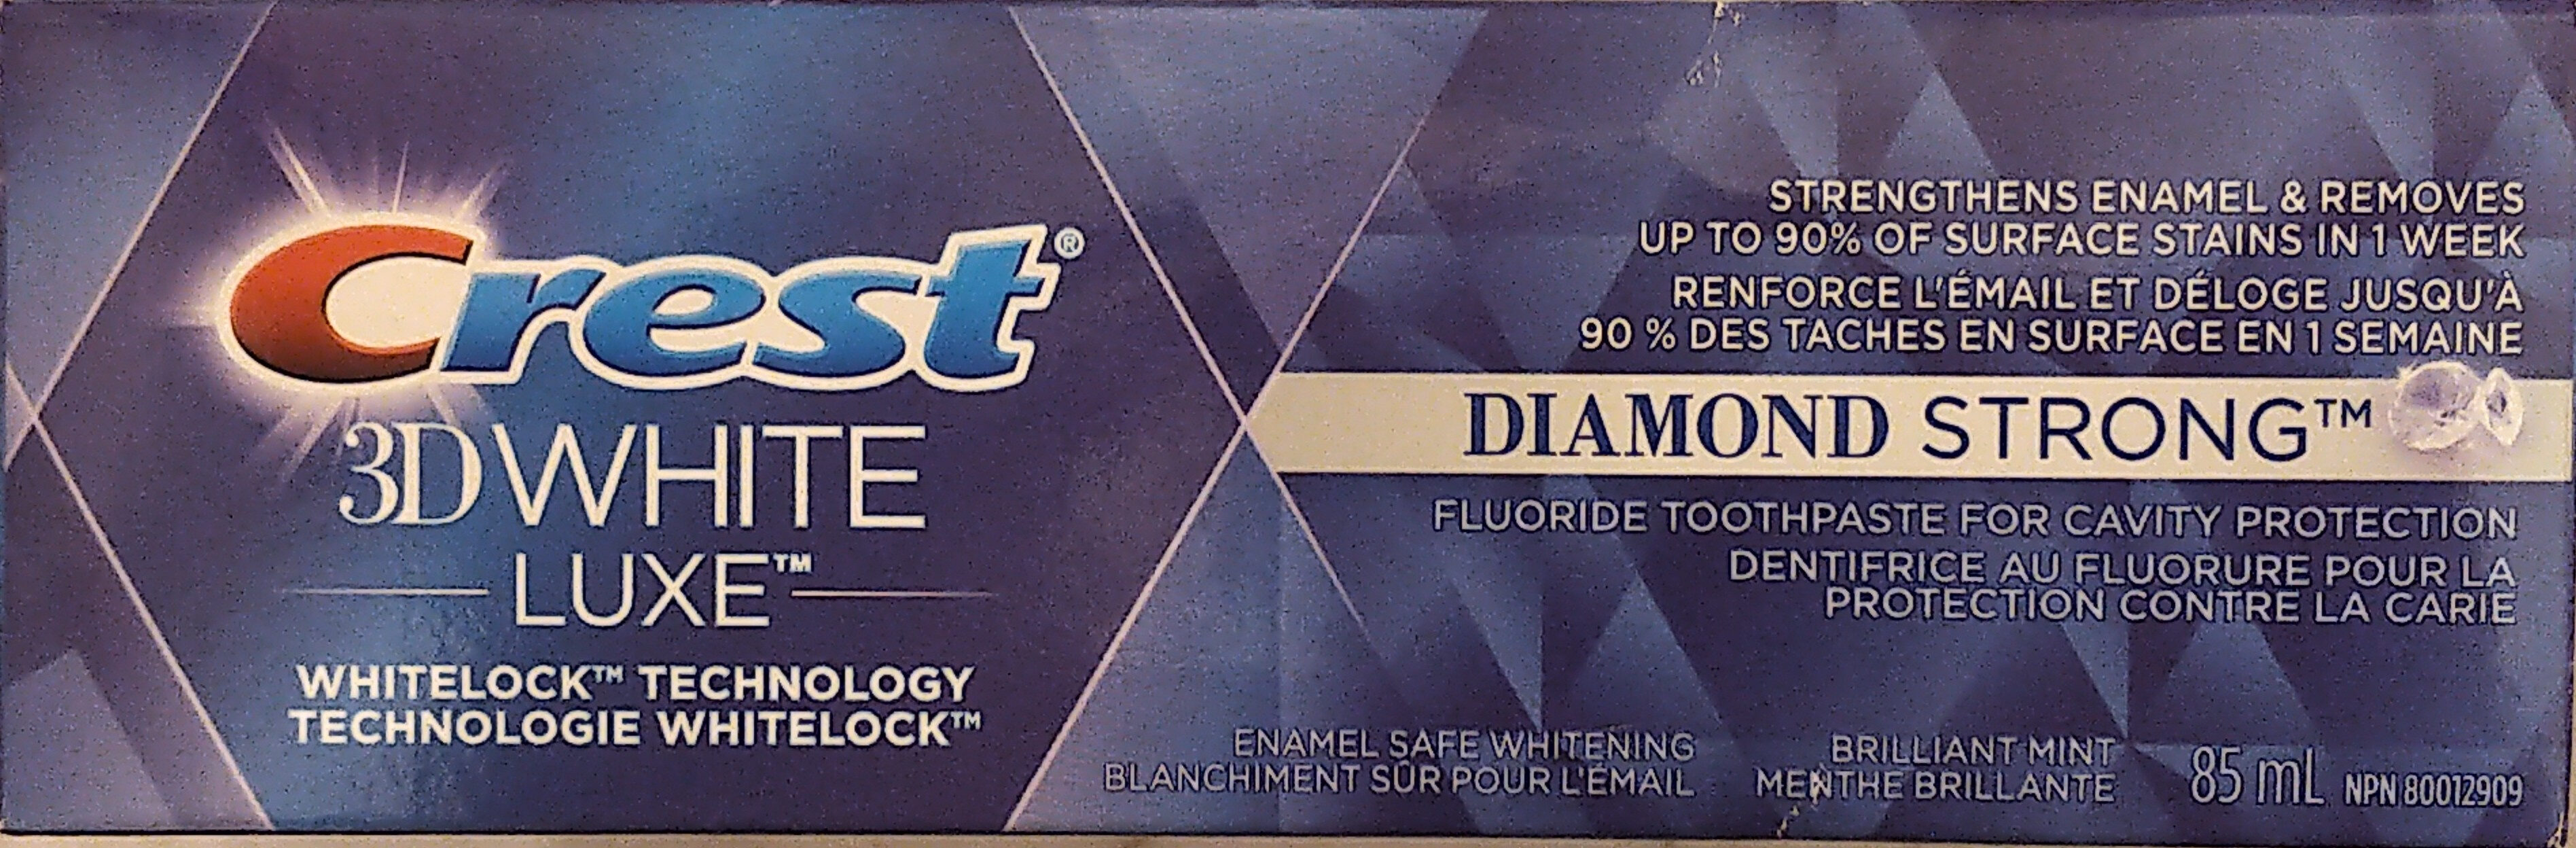 3D White Luxe Diamond Strong Brilliant Mint Fluoride Toothpaste - Produkt - en